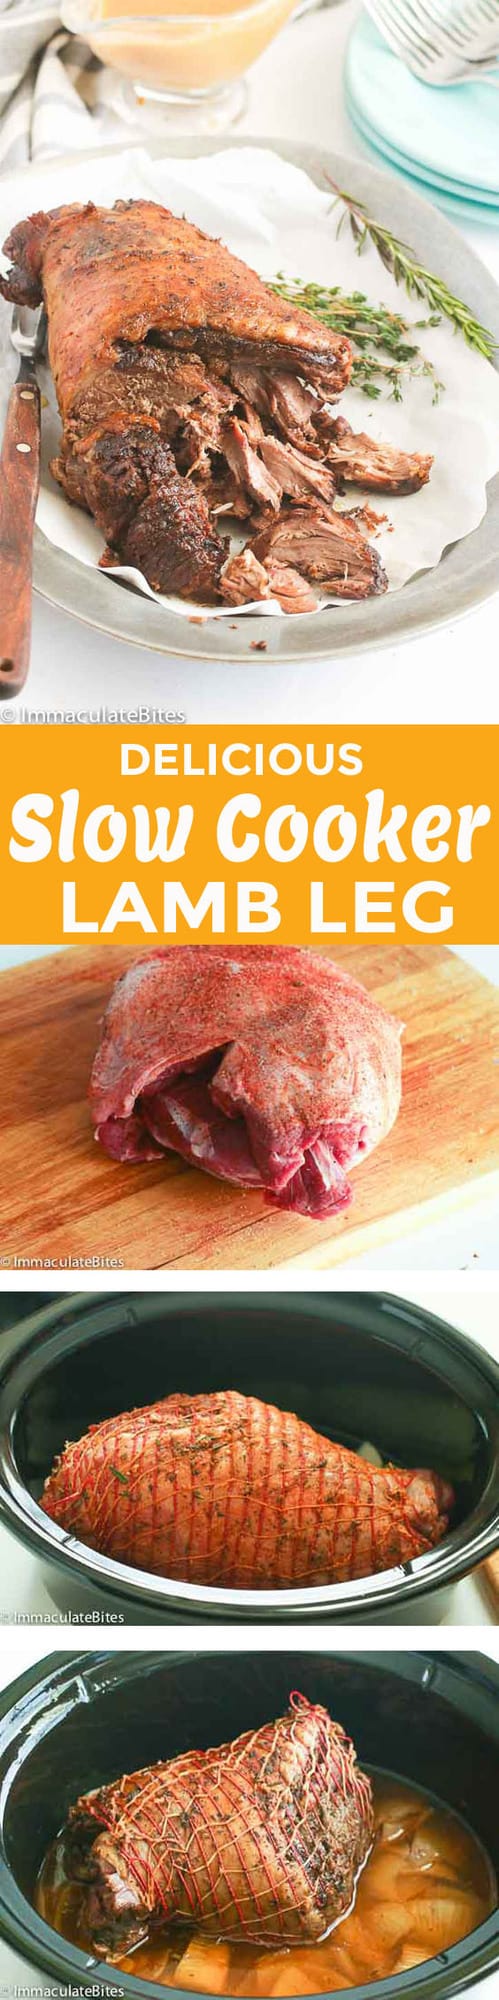 Slow Cooker Lamb Leg